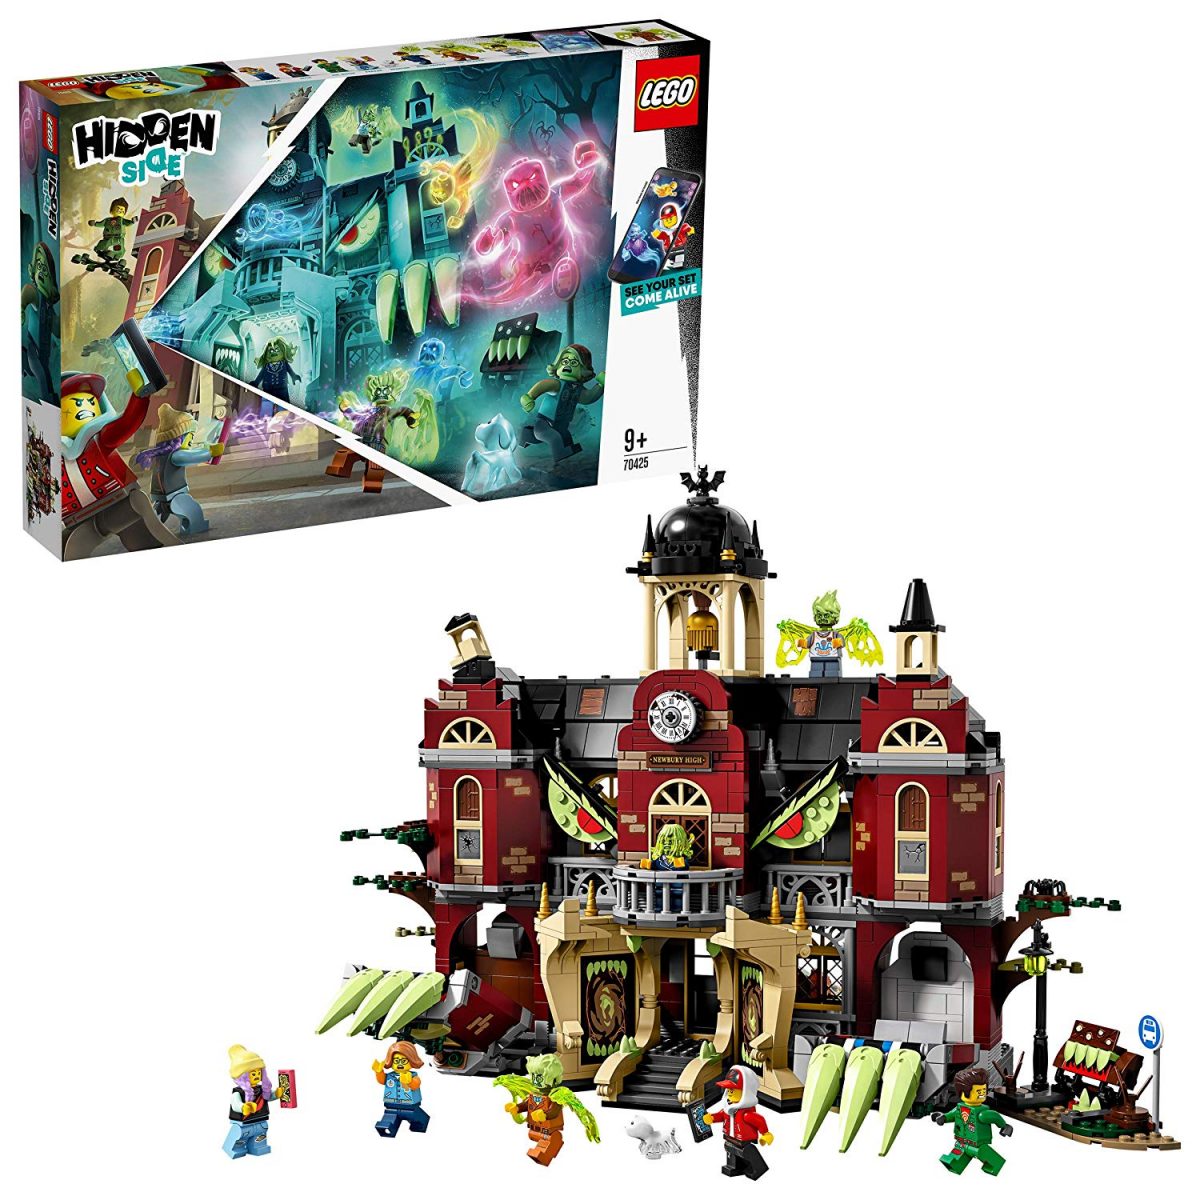 LEGO Hidden Side First Official Set Images Released